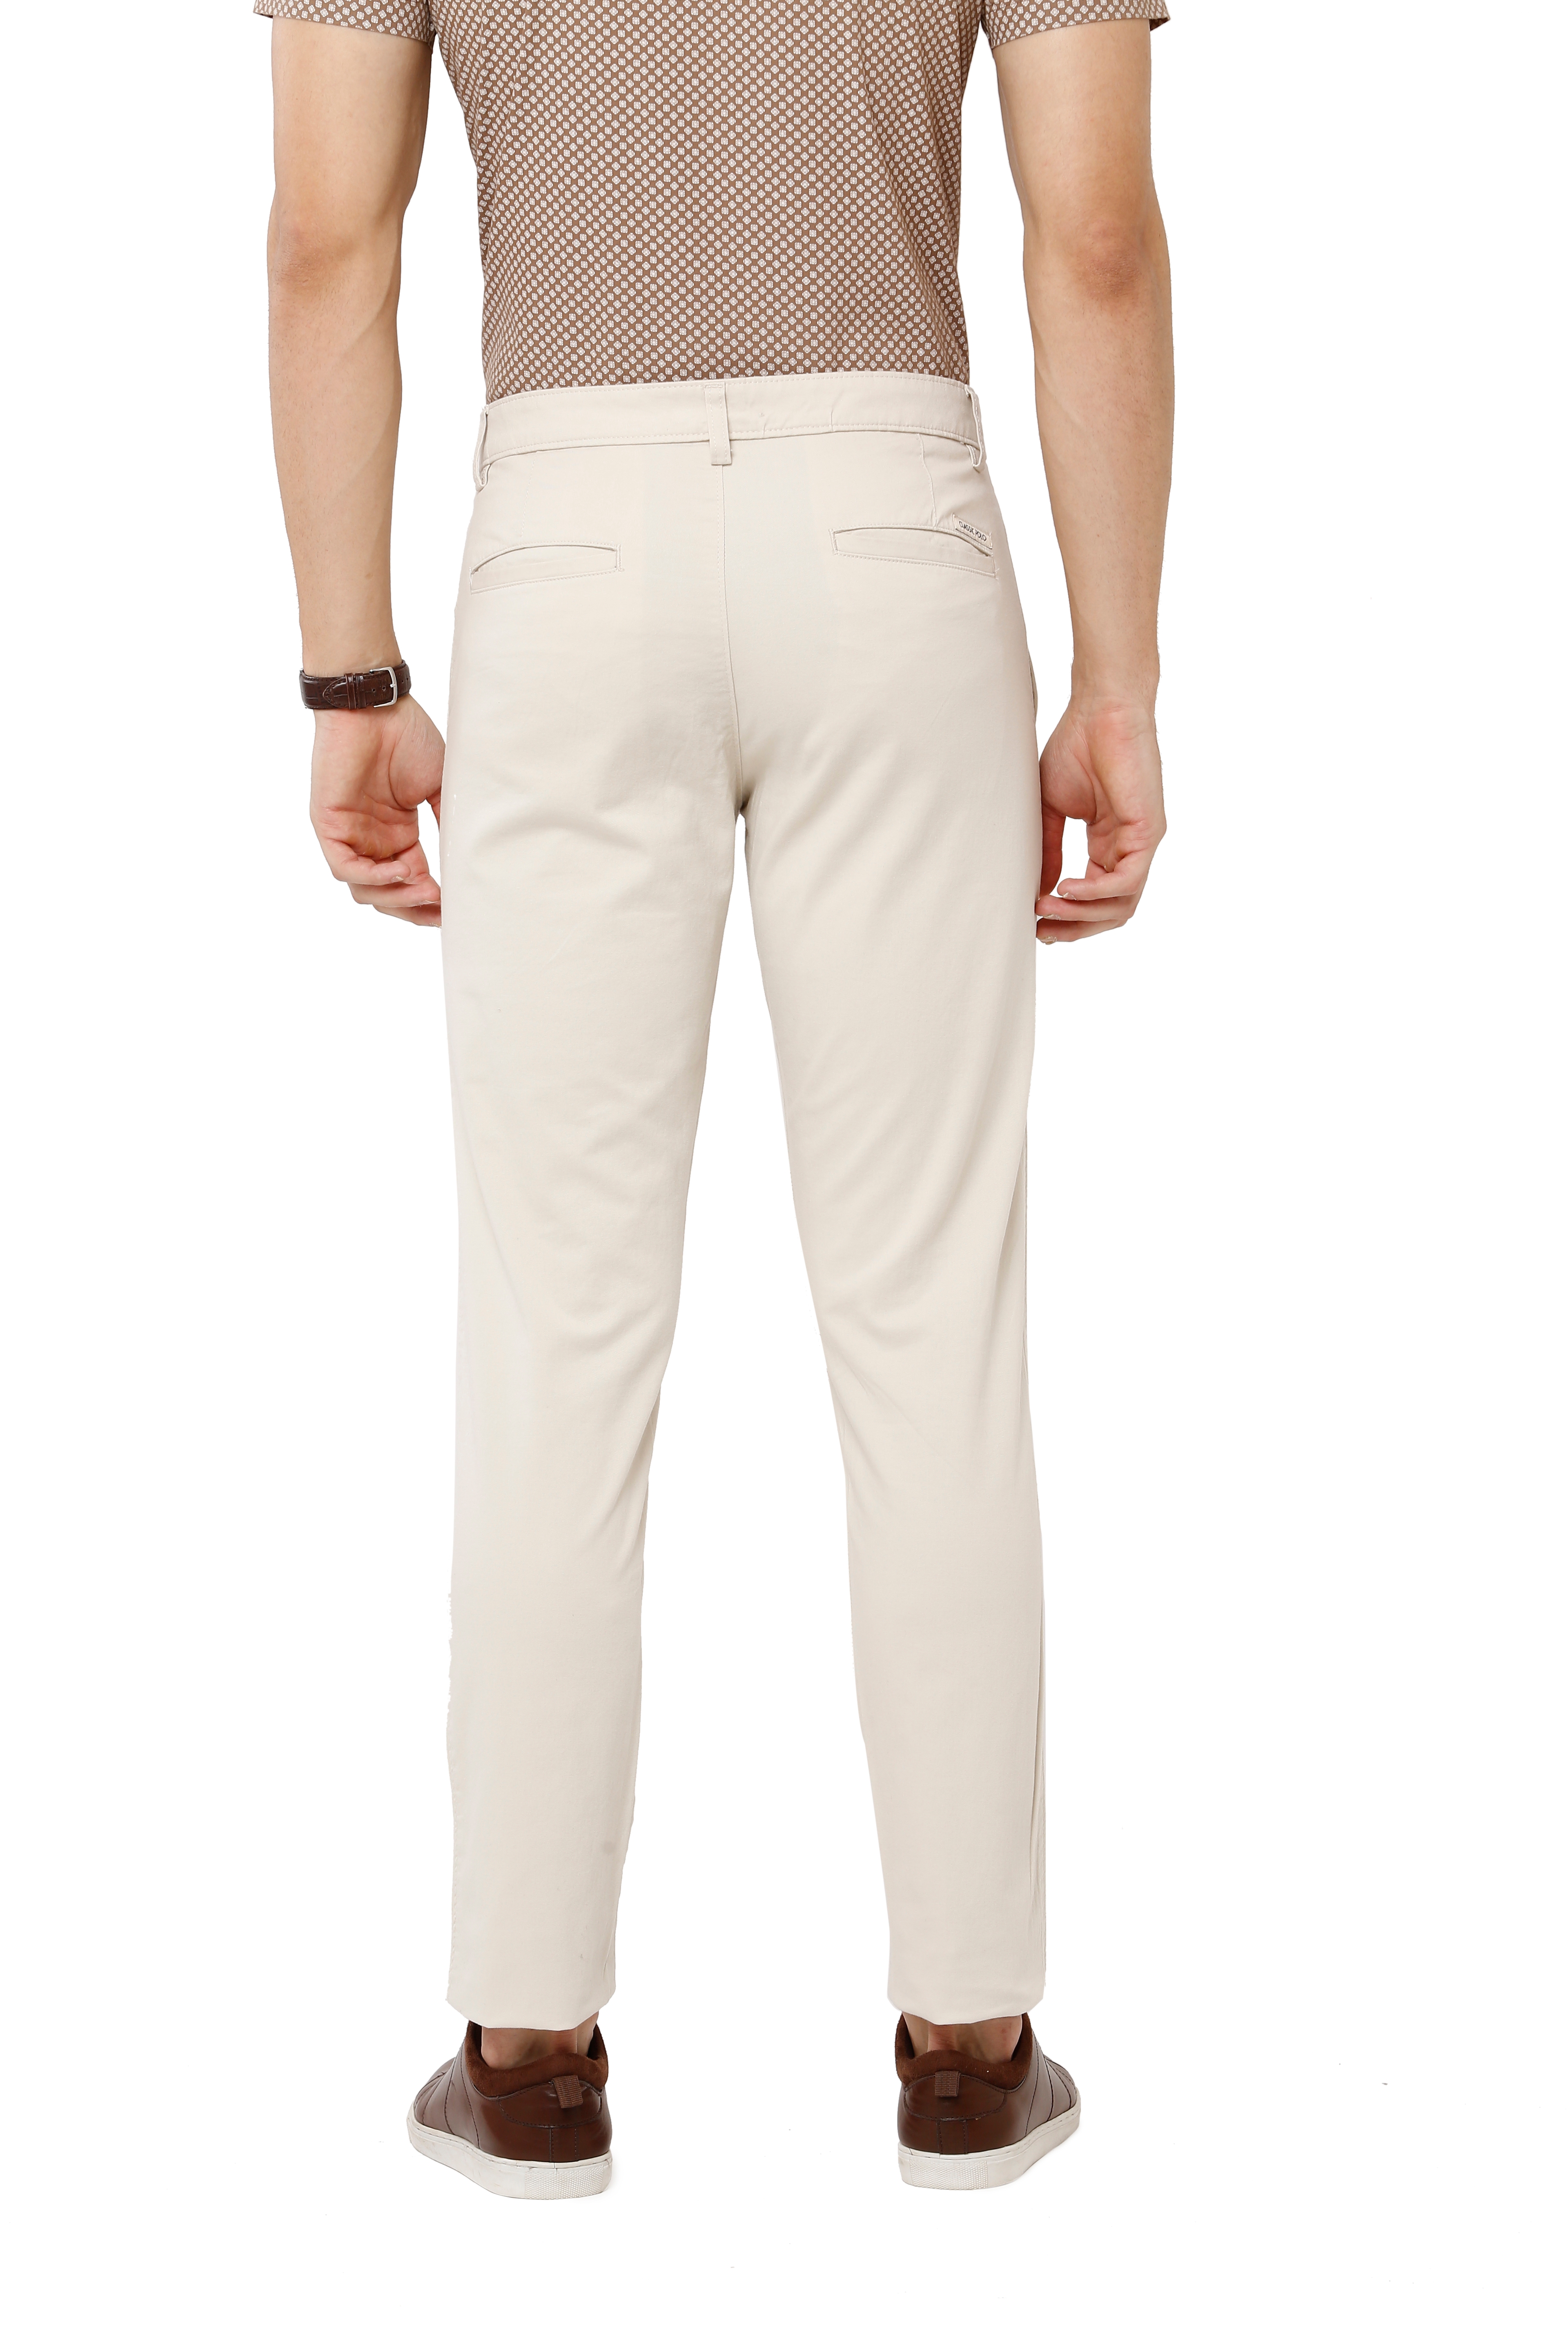 Classic Polo Mens 100% Cotton Solid Slim Fit Cream Color Trousers